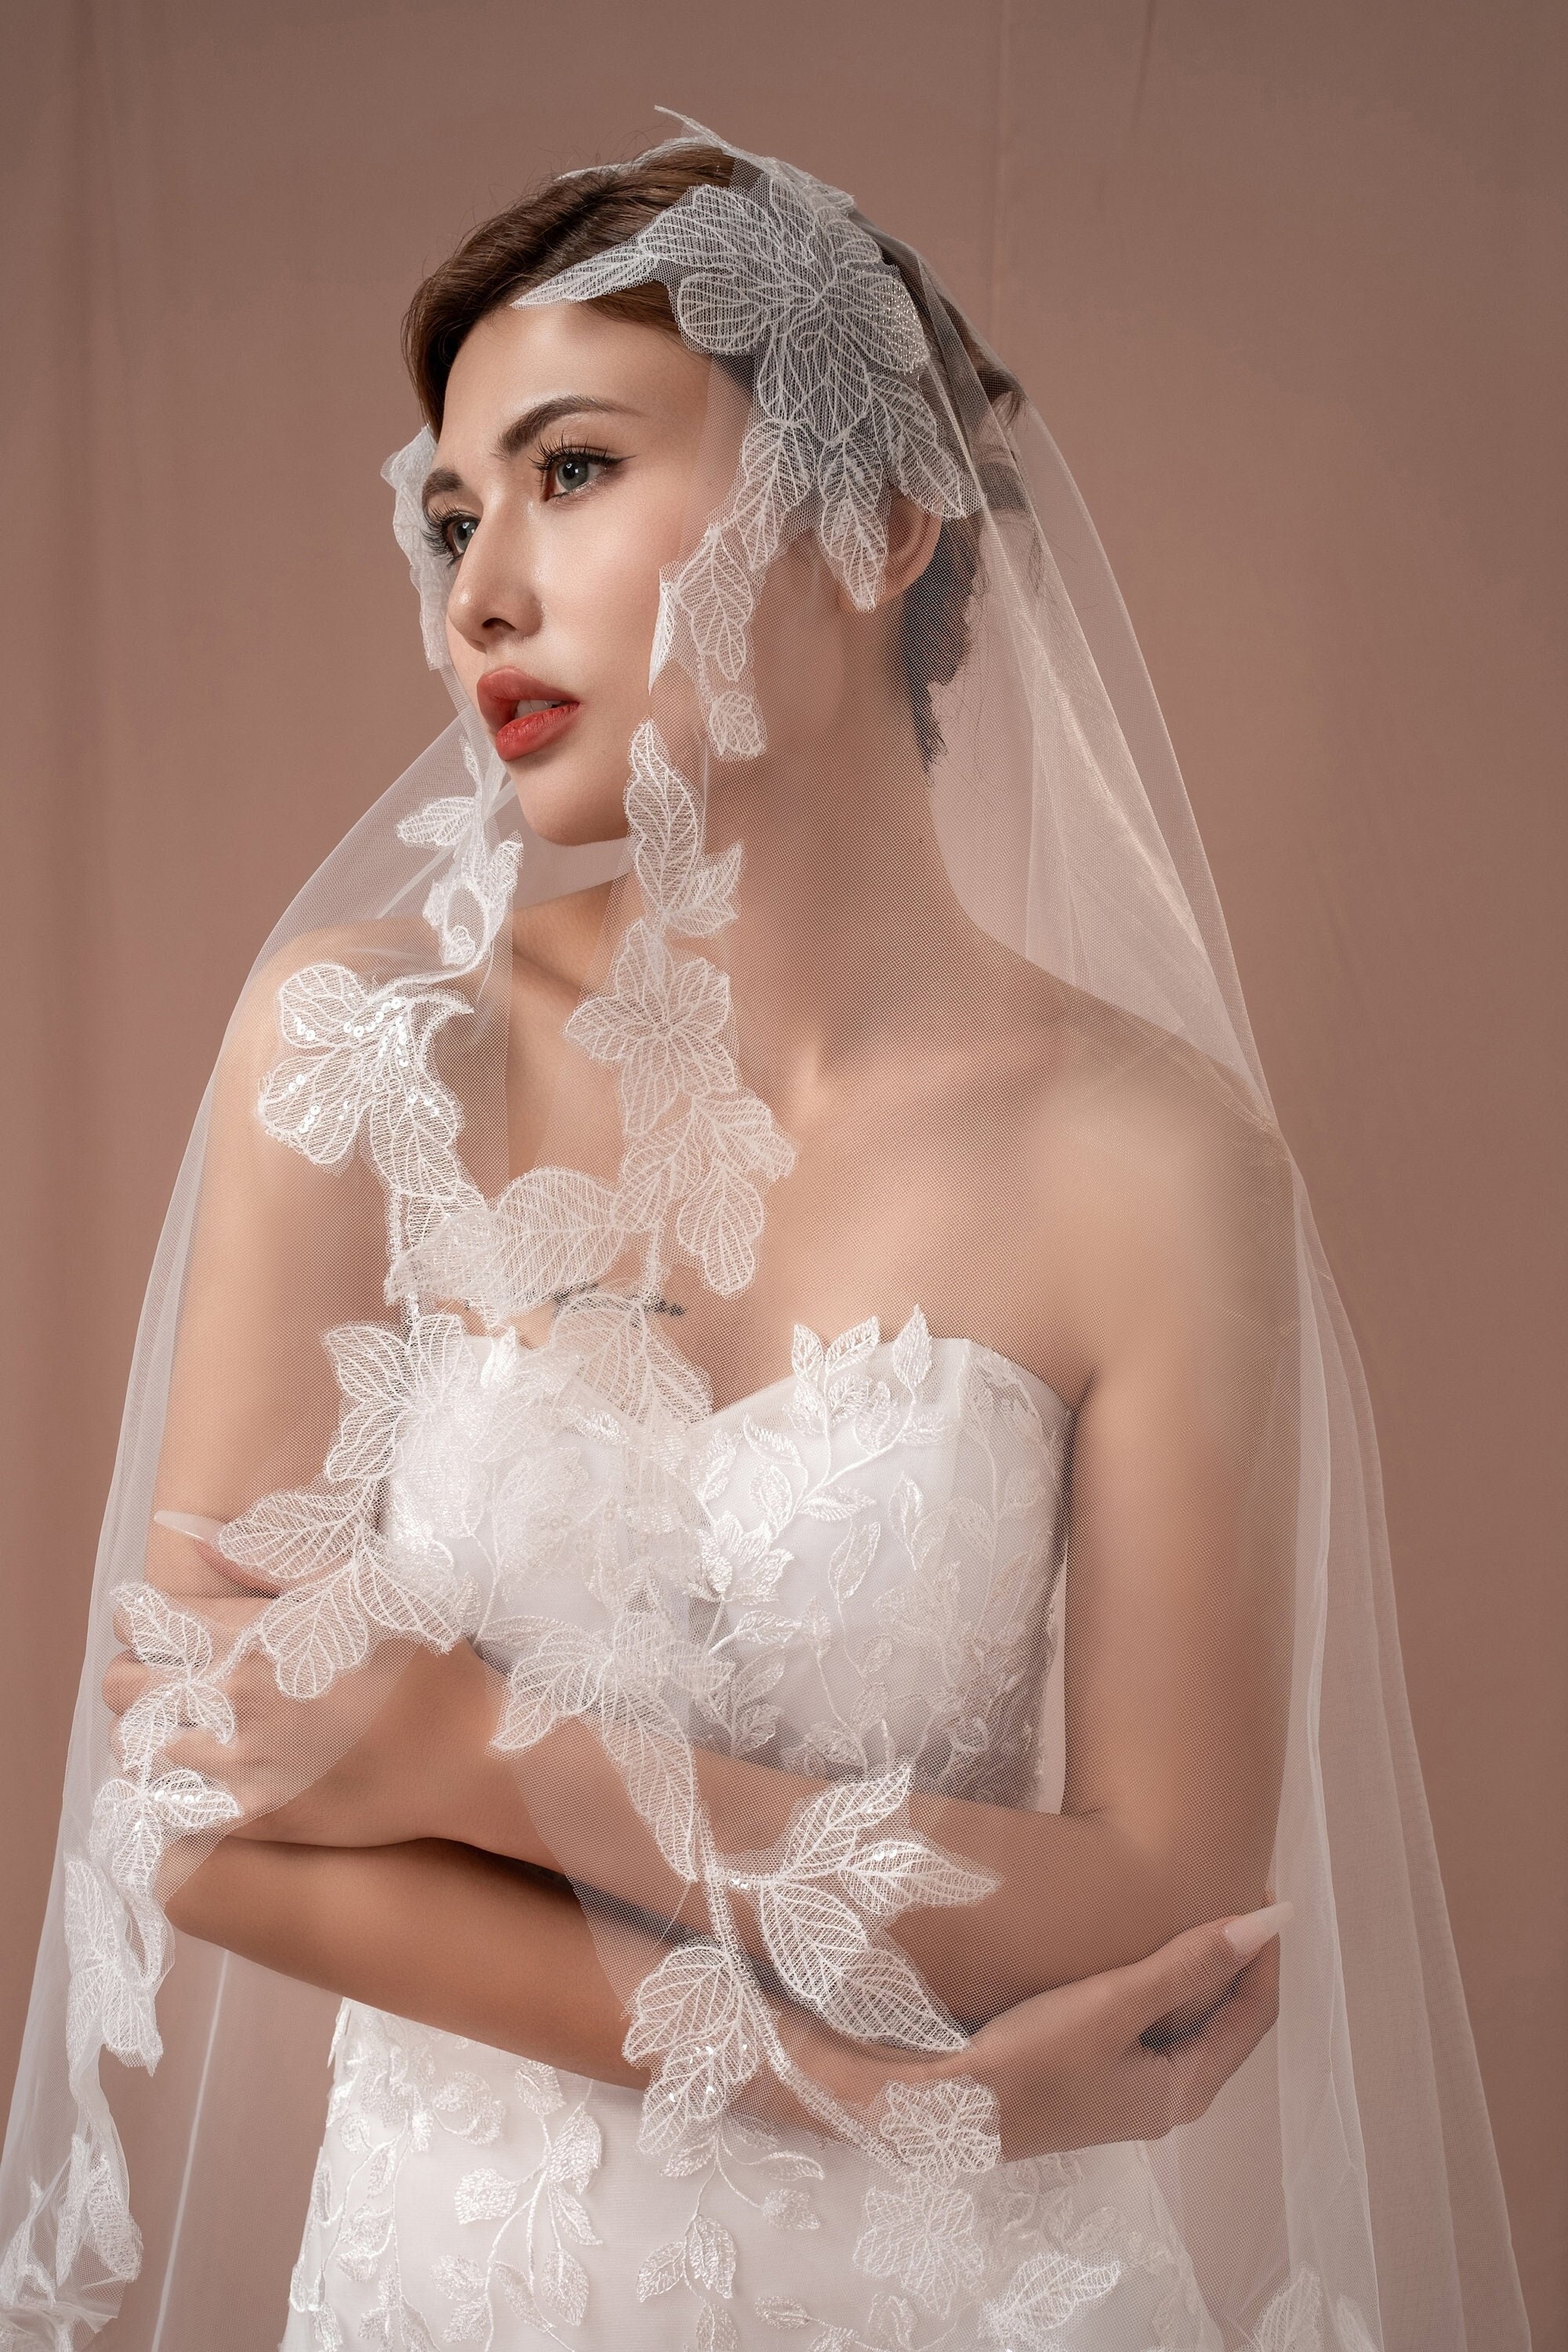 1pc Women's Lace Edged Bridal Veil, Single Layer Short Veil